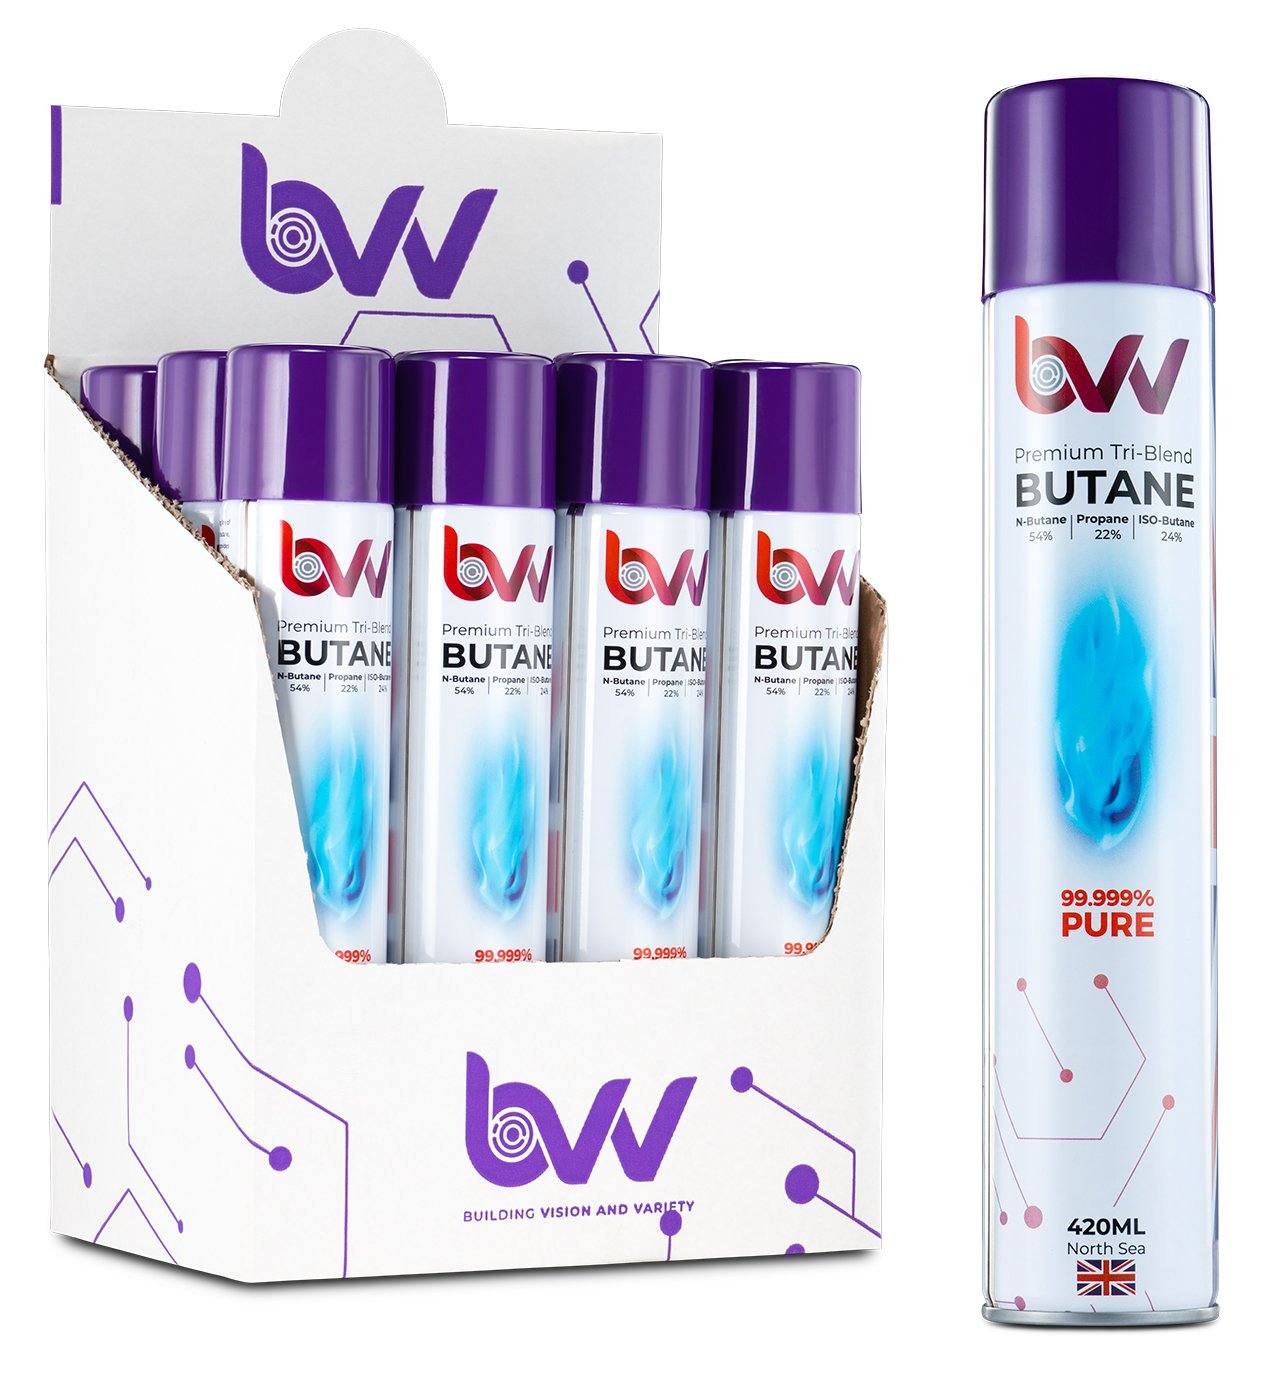 BVV 420ml Premium Tri-Blend Butane 99.999% Pure MasterCase - 72 Cans 